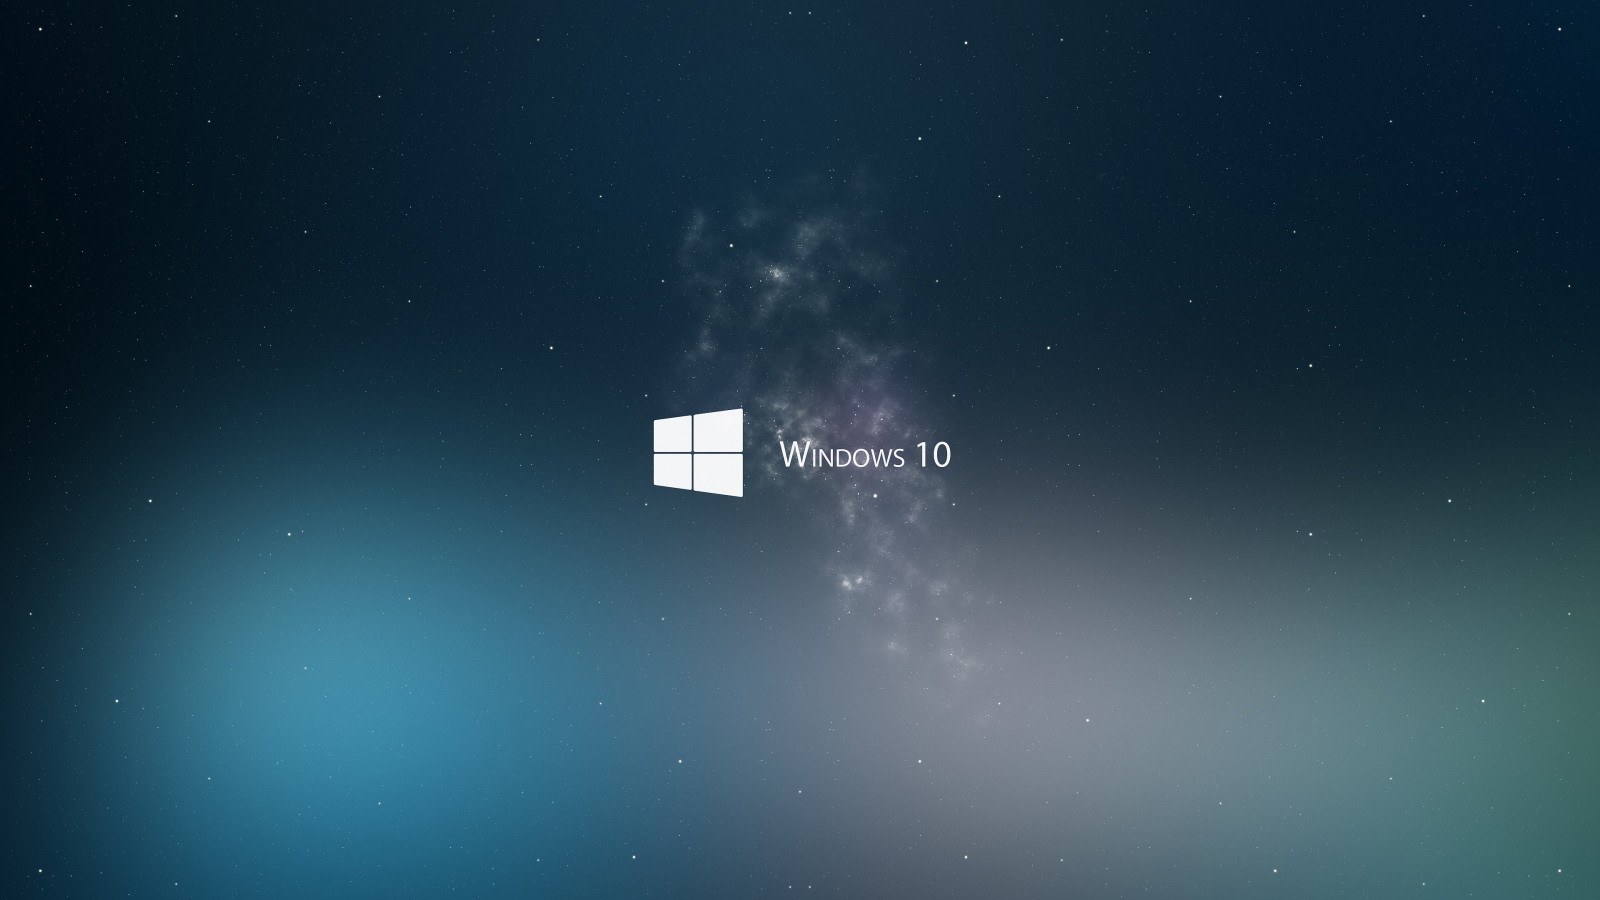 Windows 10 Wallpaper for Desktop 1600x900